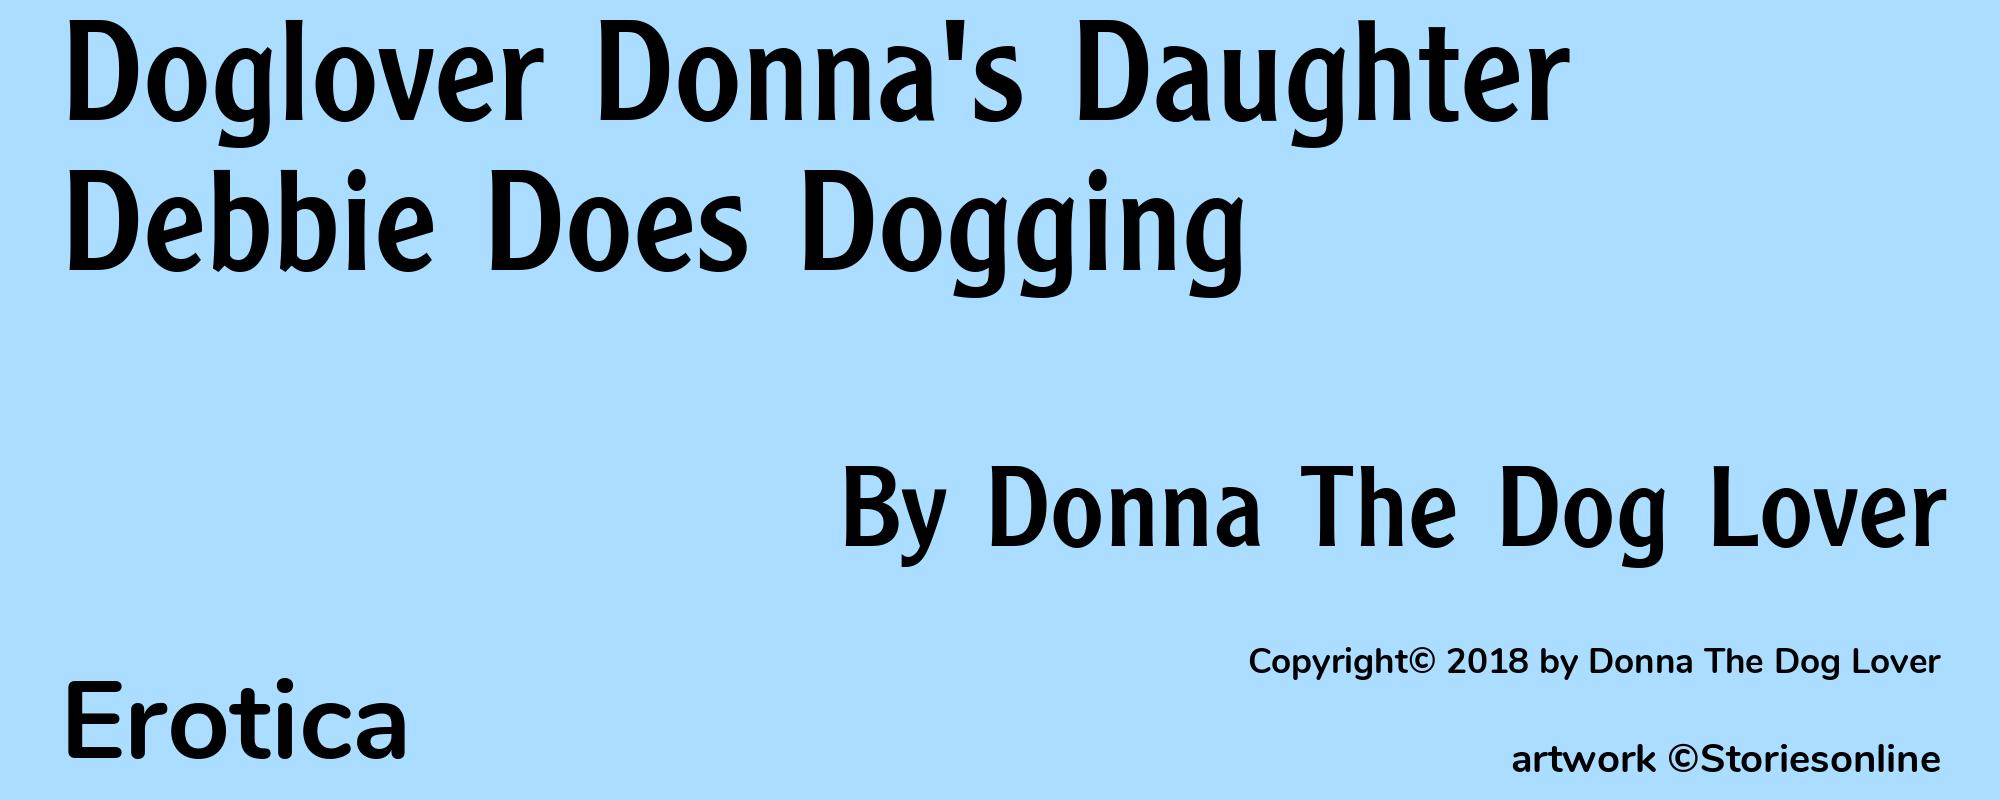 Doglover Donna's Daughter Debbie Does Dogging - Cover